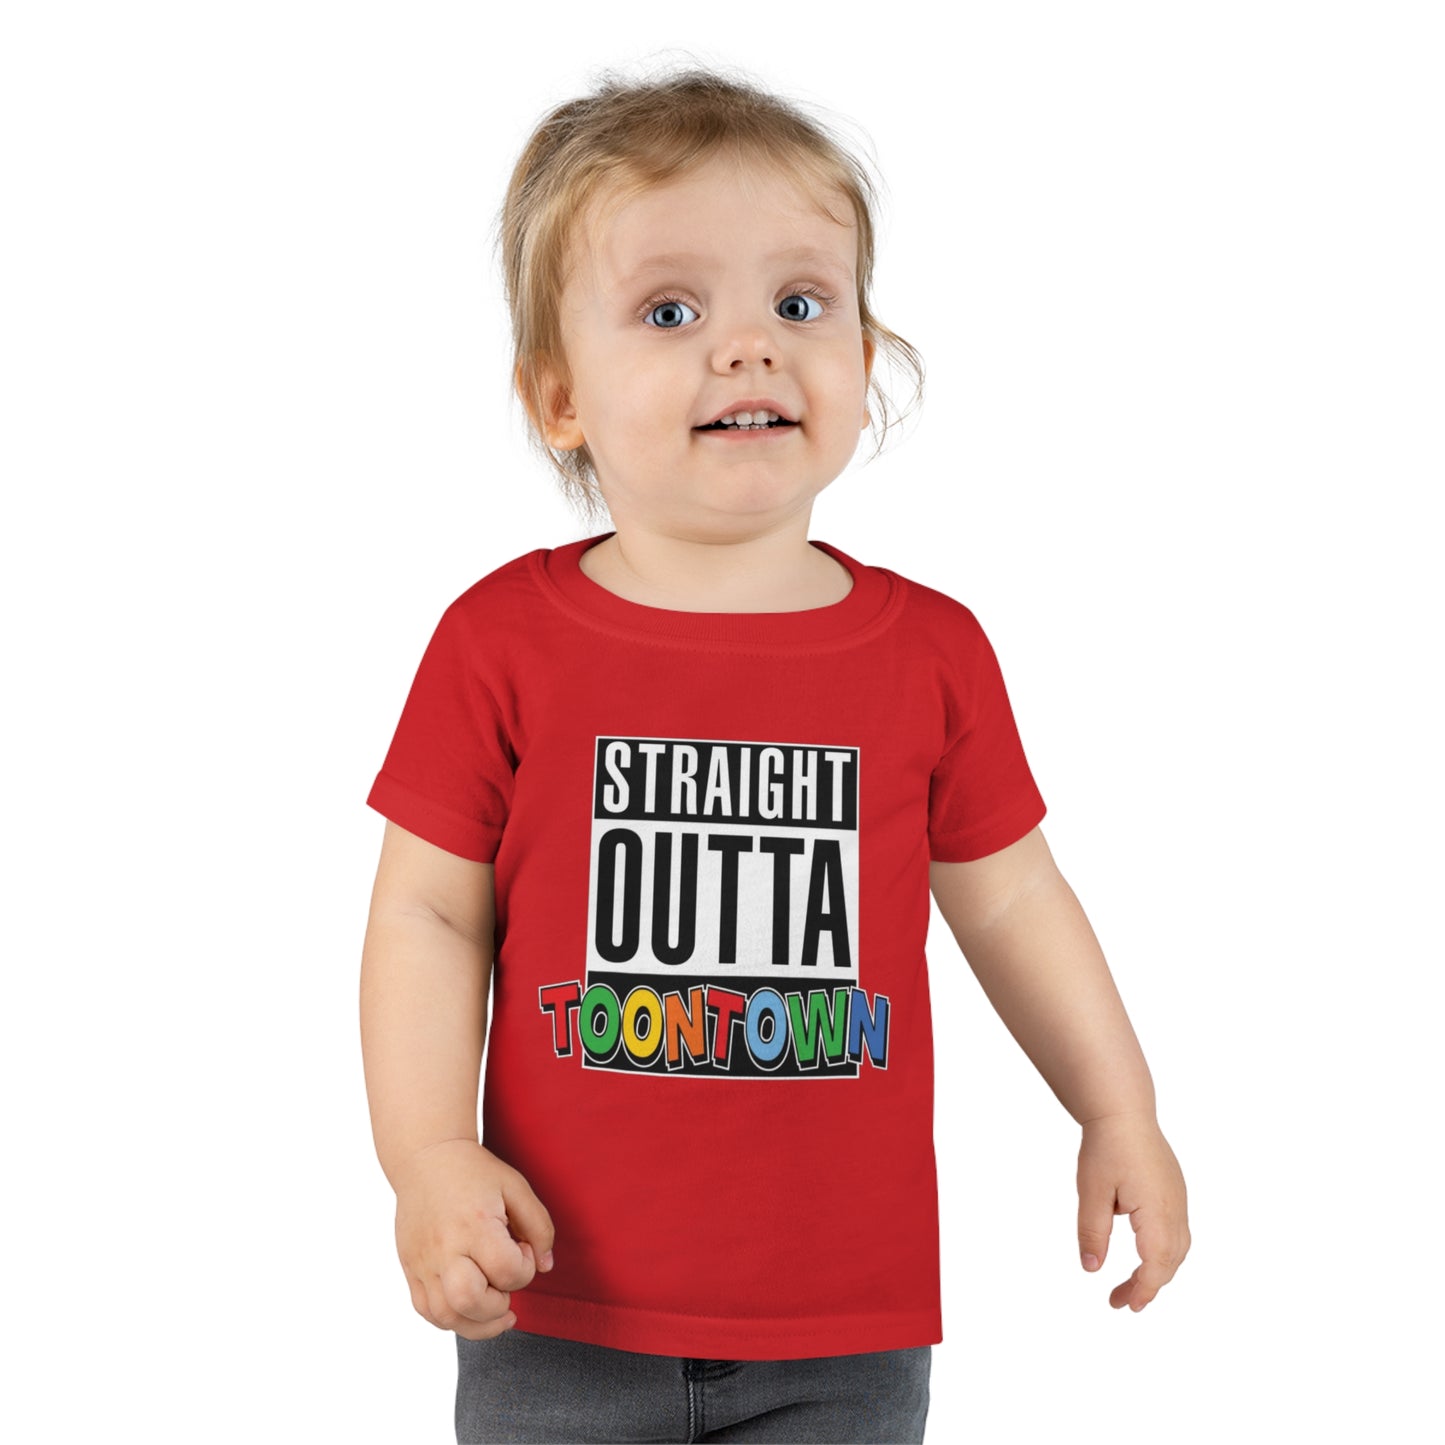 Toddler toon town T-shirt